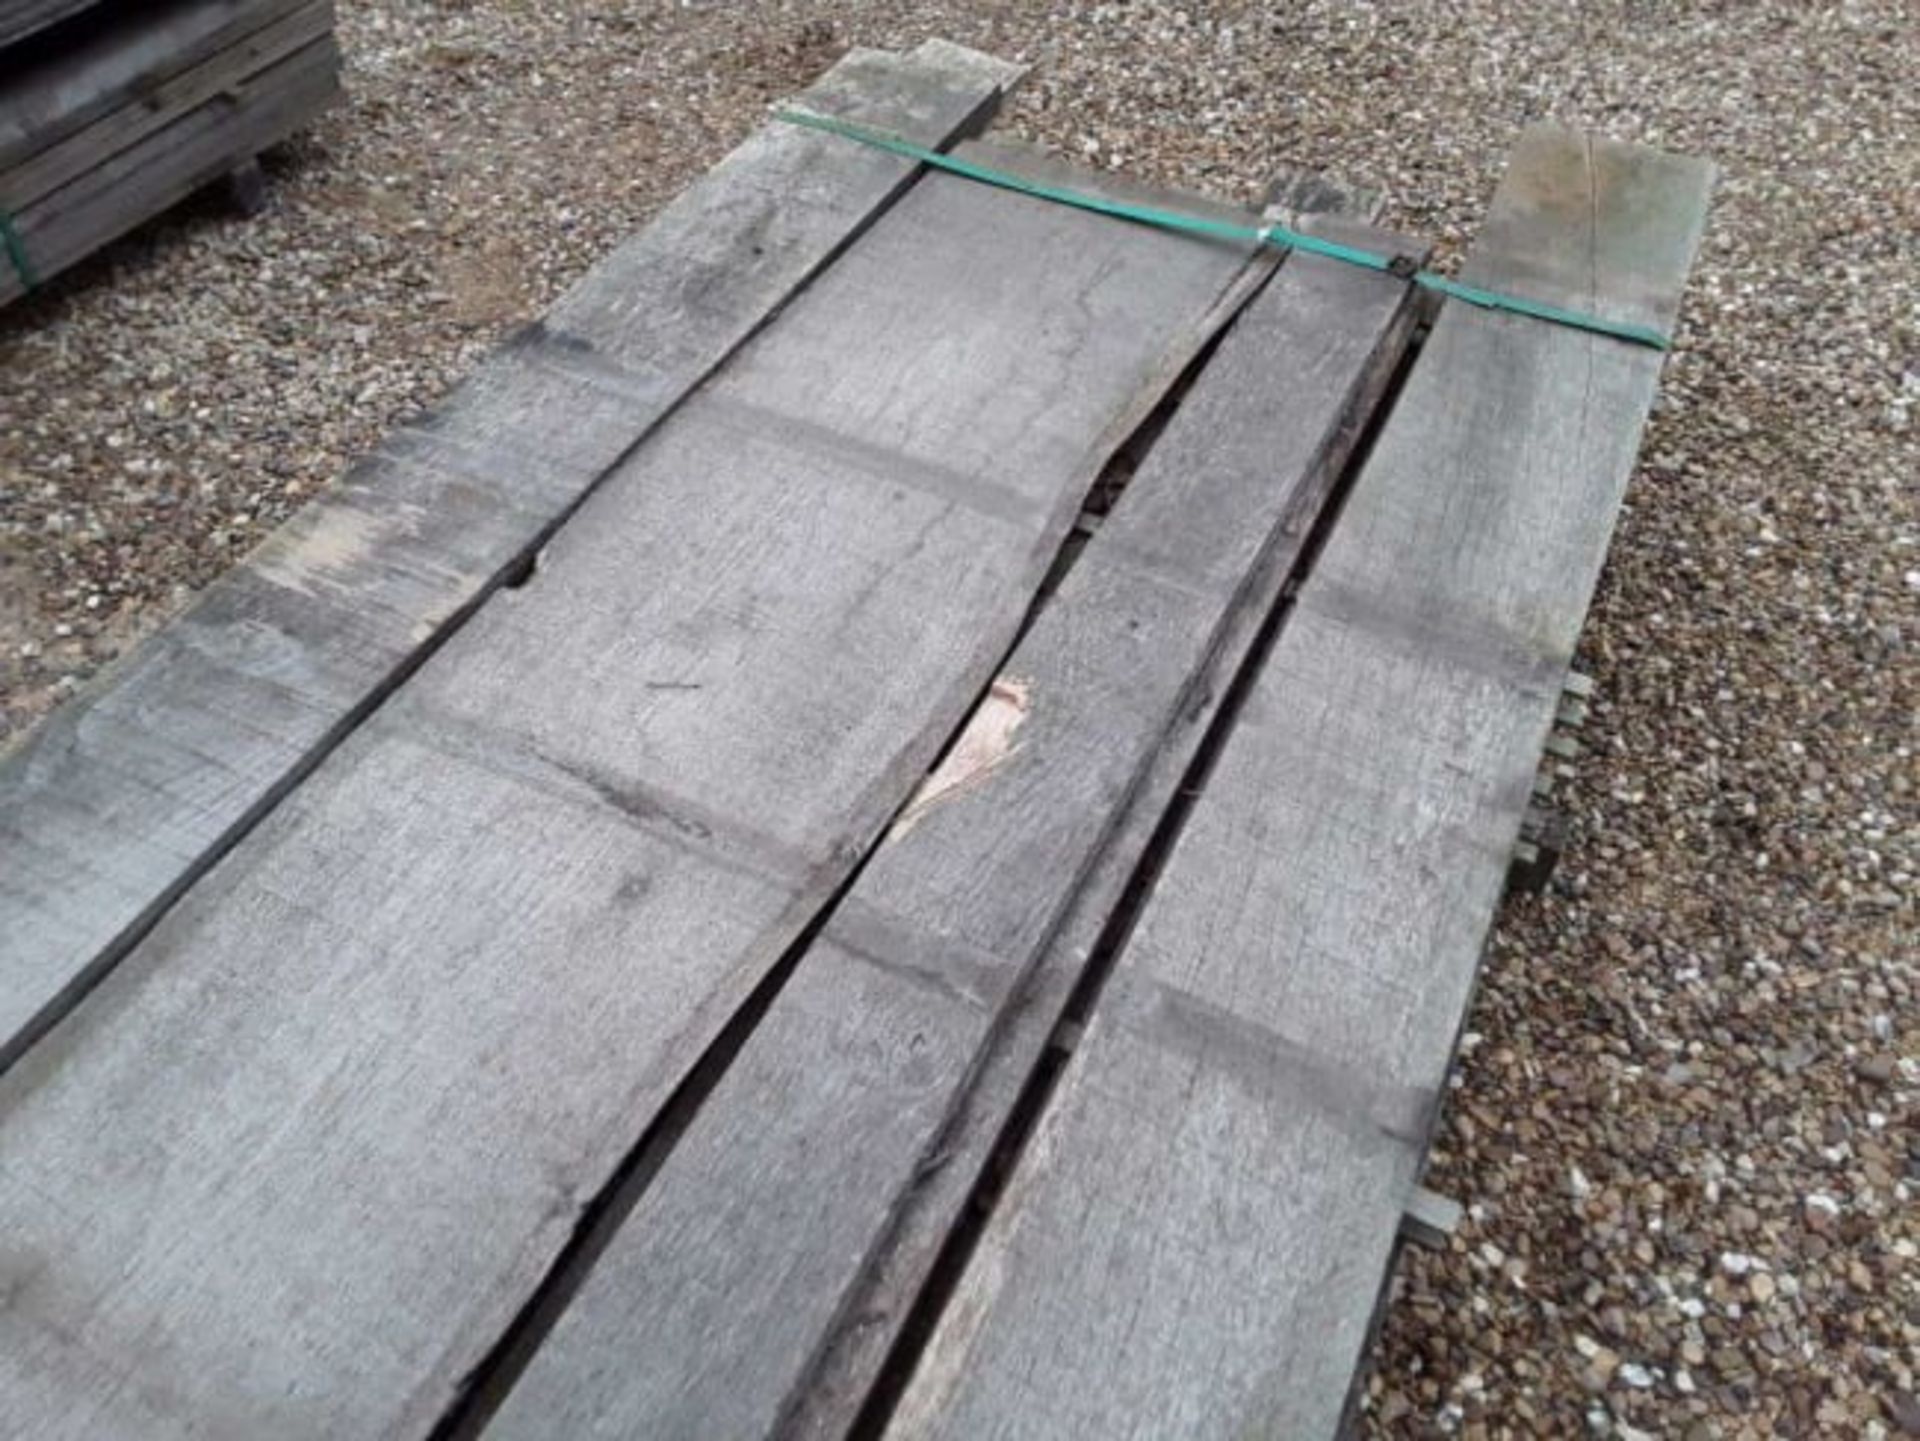 30 x Hardwood Air Dried Timber Sawn Waney Edge / Live Edge English Oak Boards / Planks - Image 4 of 5